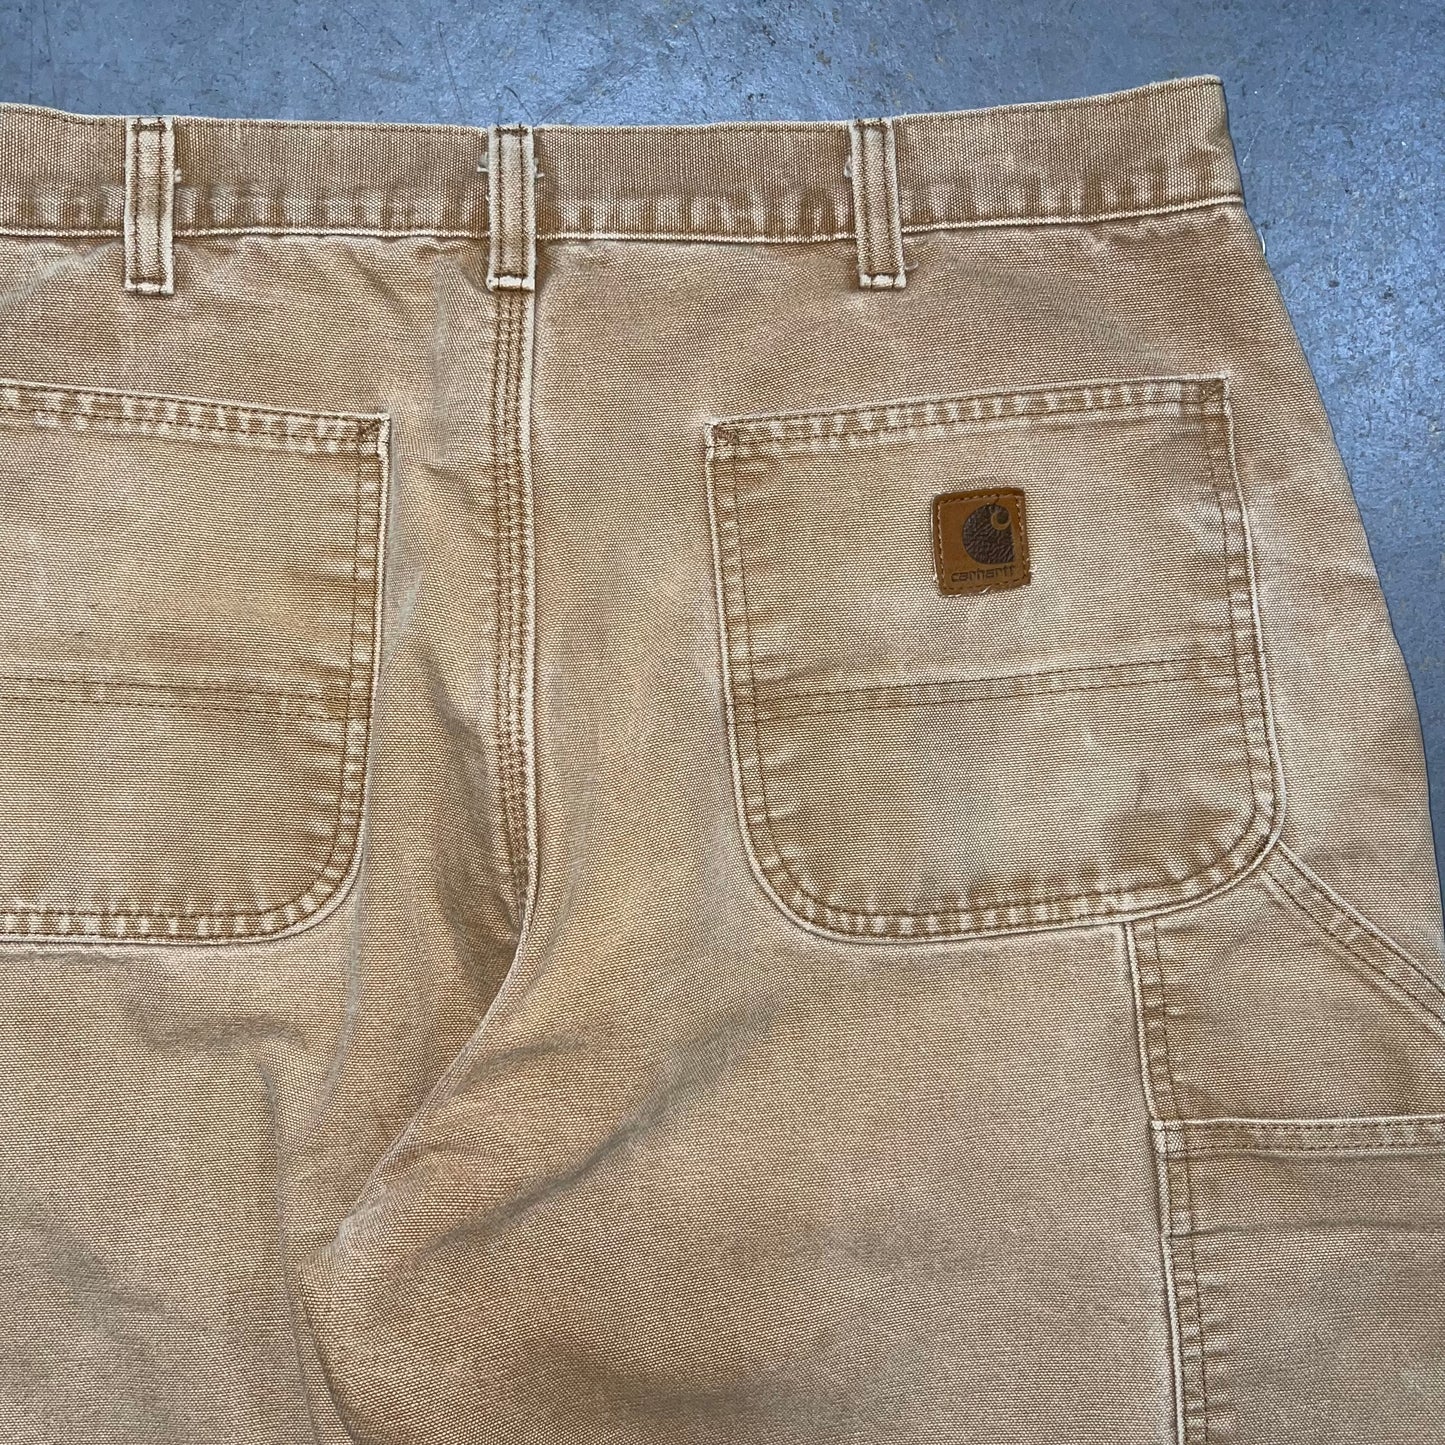 Vintage Dungaree Fit Flannel Lined Carpenter Pants. 34x34